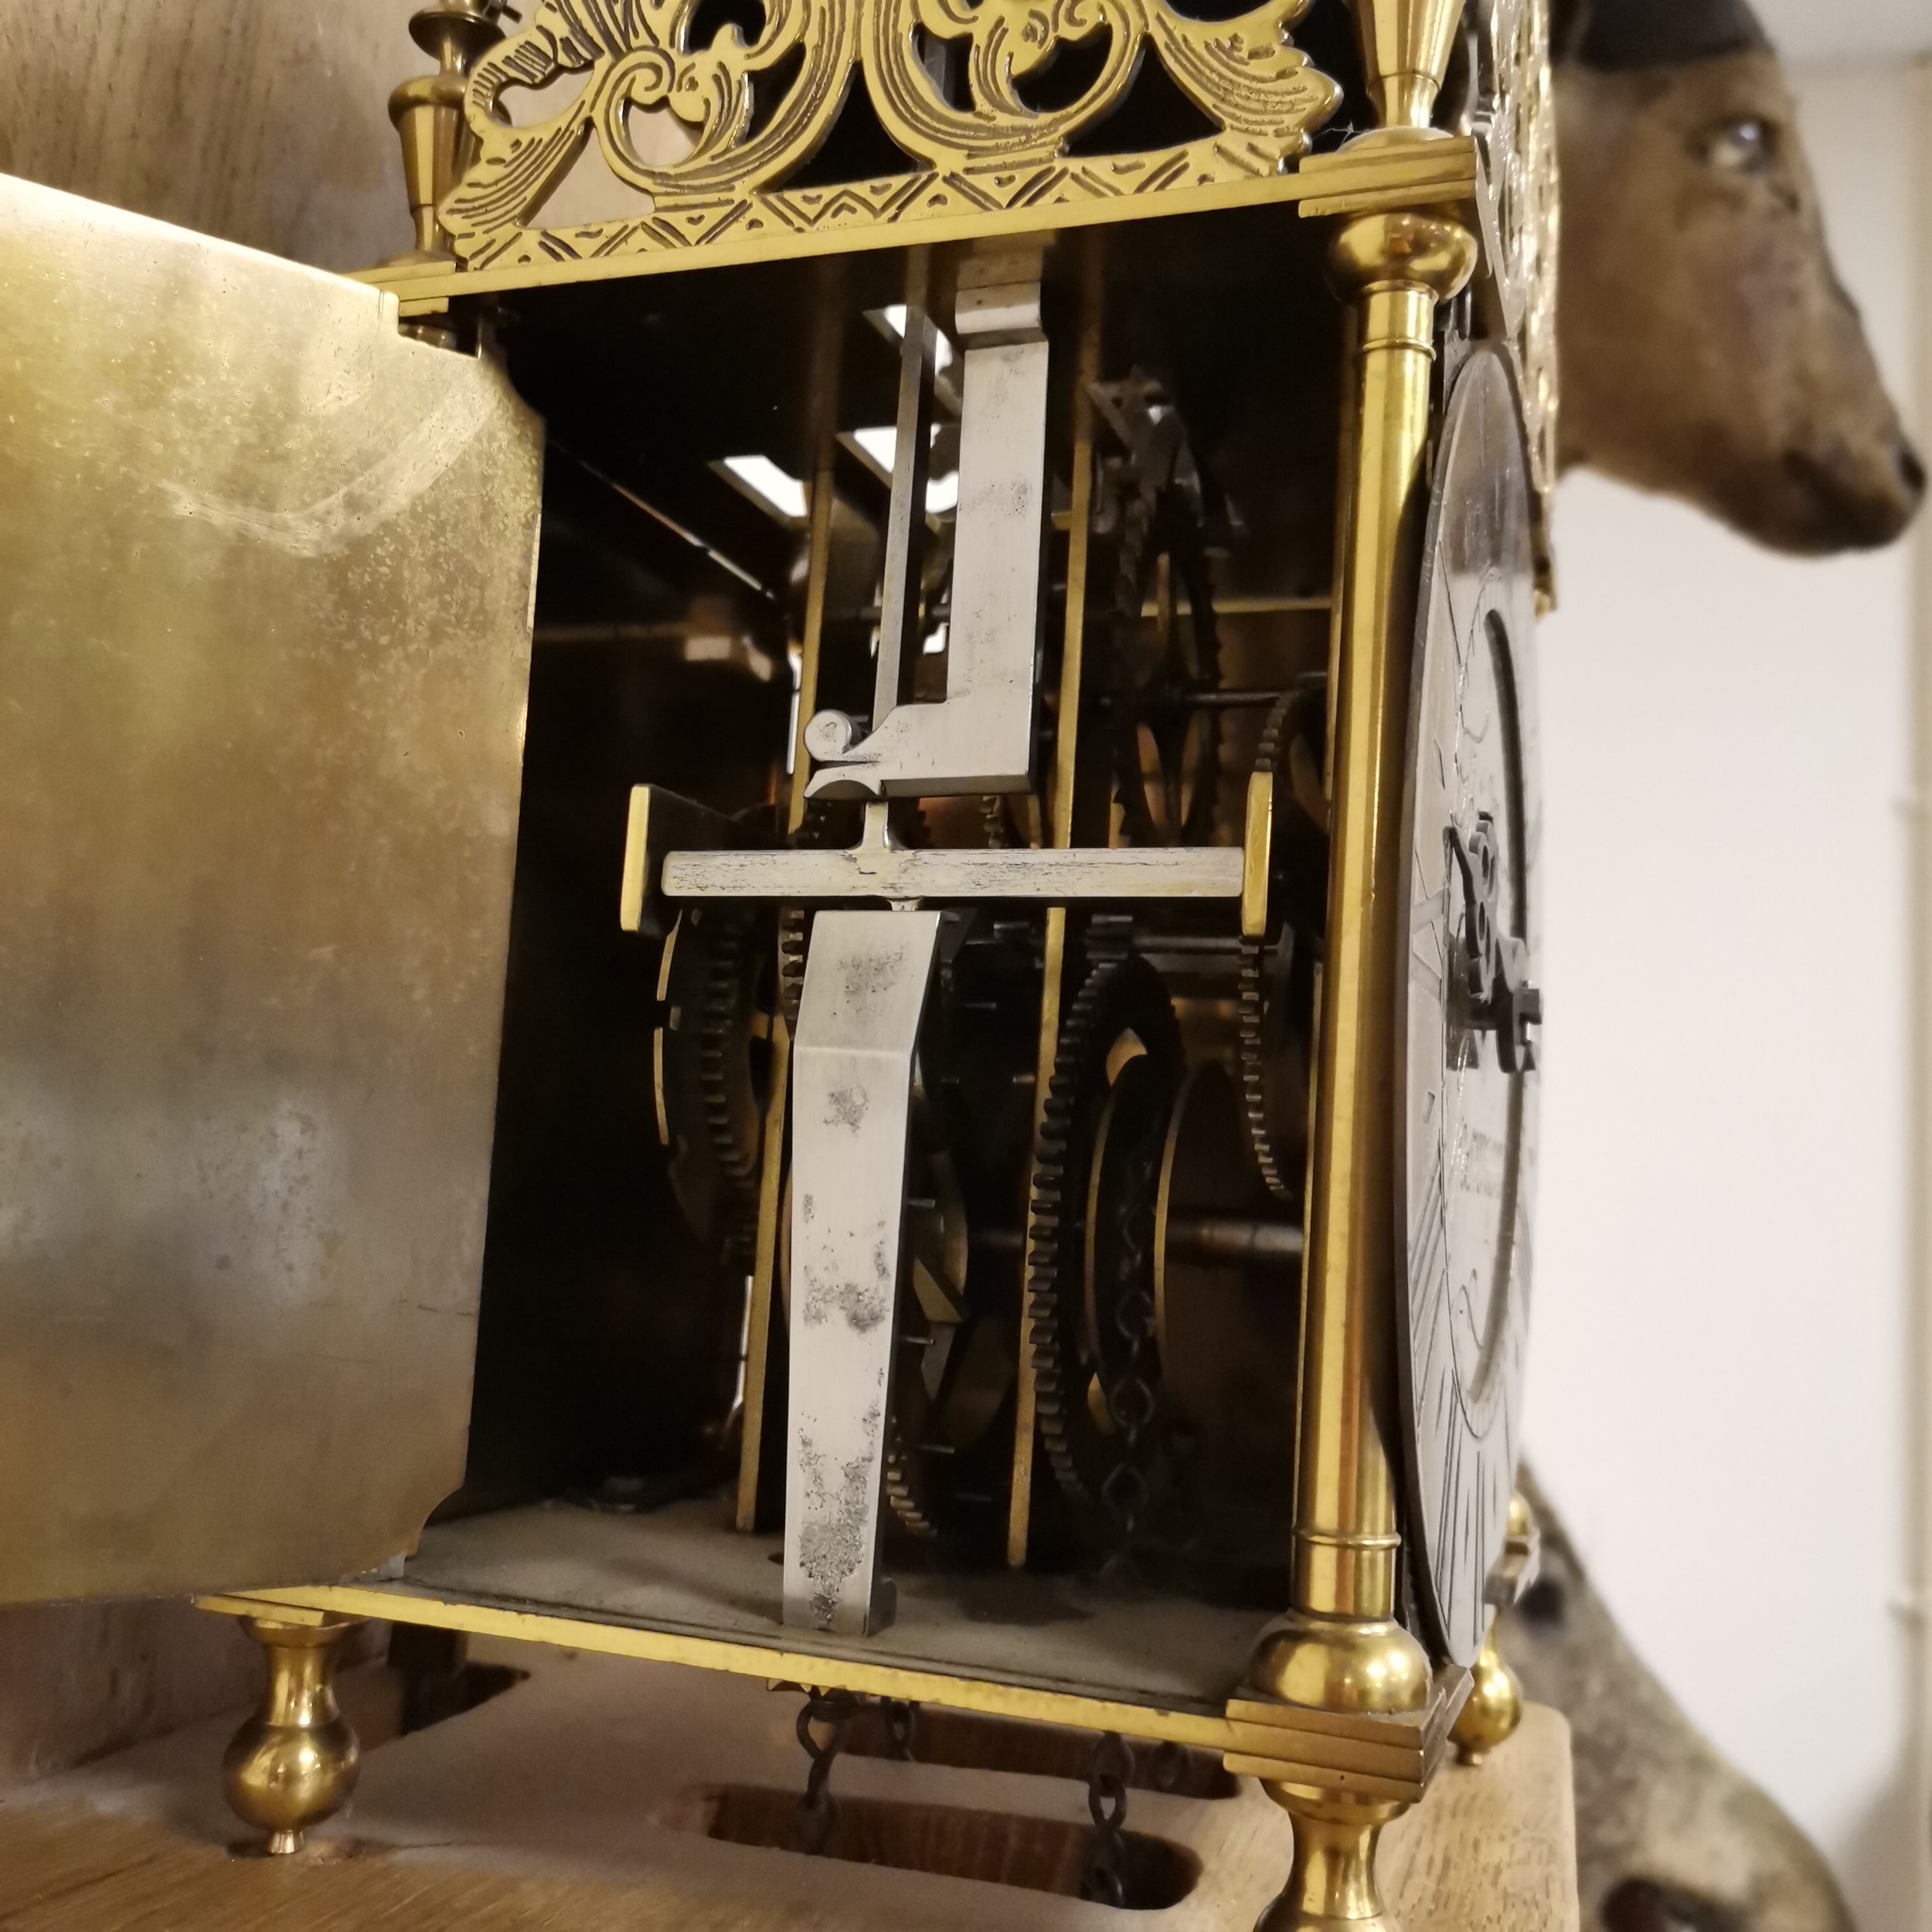 17th century style brass lantern bracket clock inscribed Thomas Moore, Ipswich on an oak wooden - Image 5 of 6